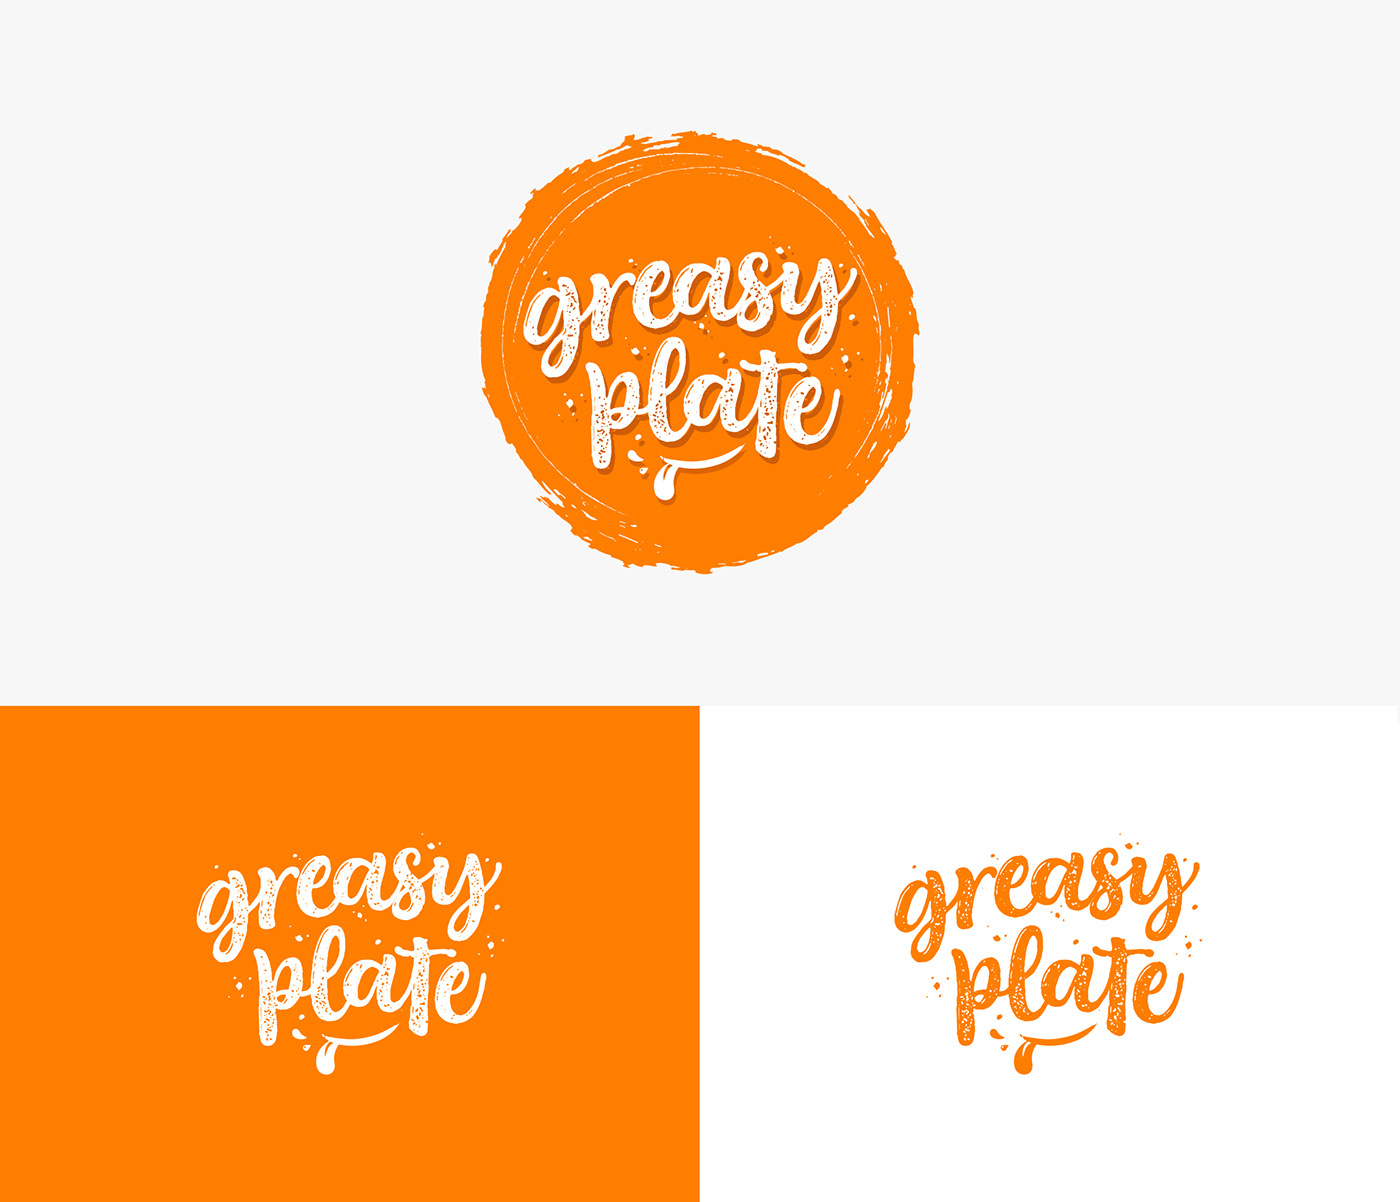 food brand food branding food logo greasy plate Logo Design philippine brand philippines plate plate logo